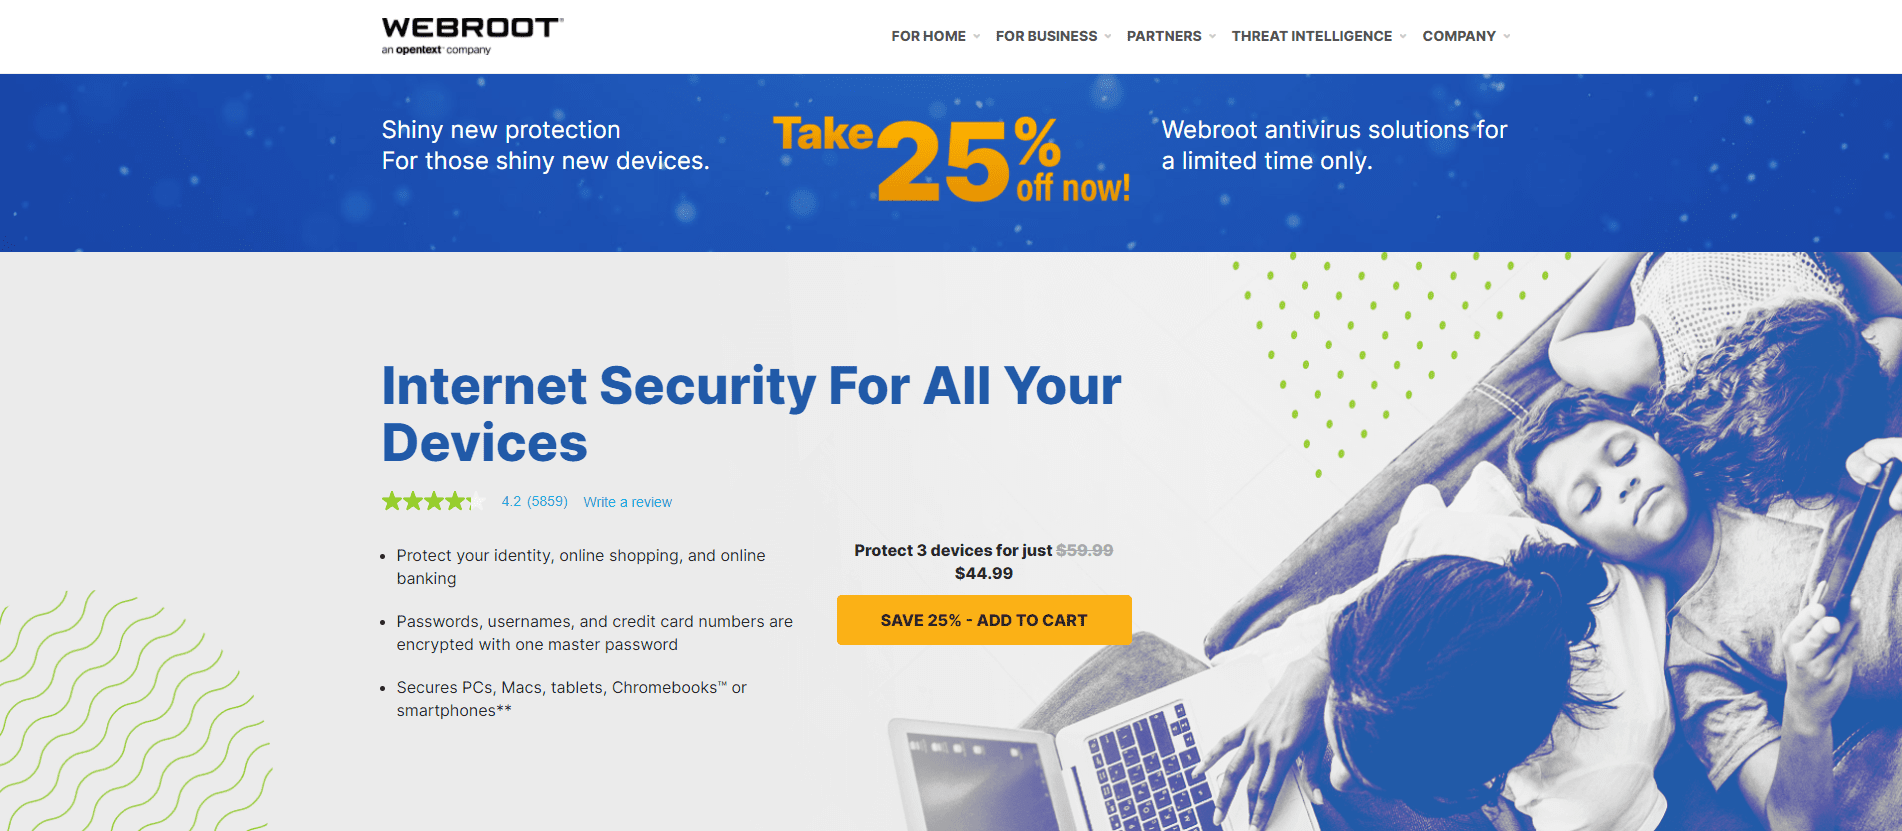 Webroot Internet Security Plus - Trend Micro Vs Webroot